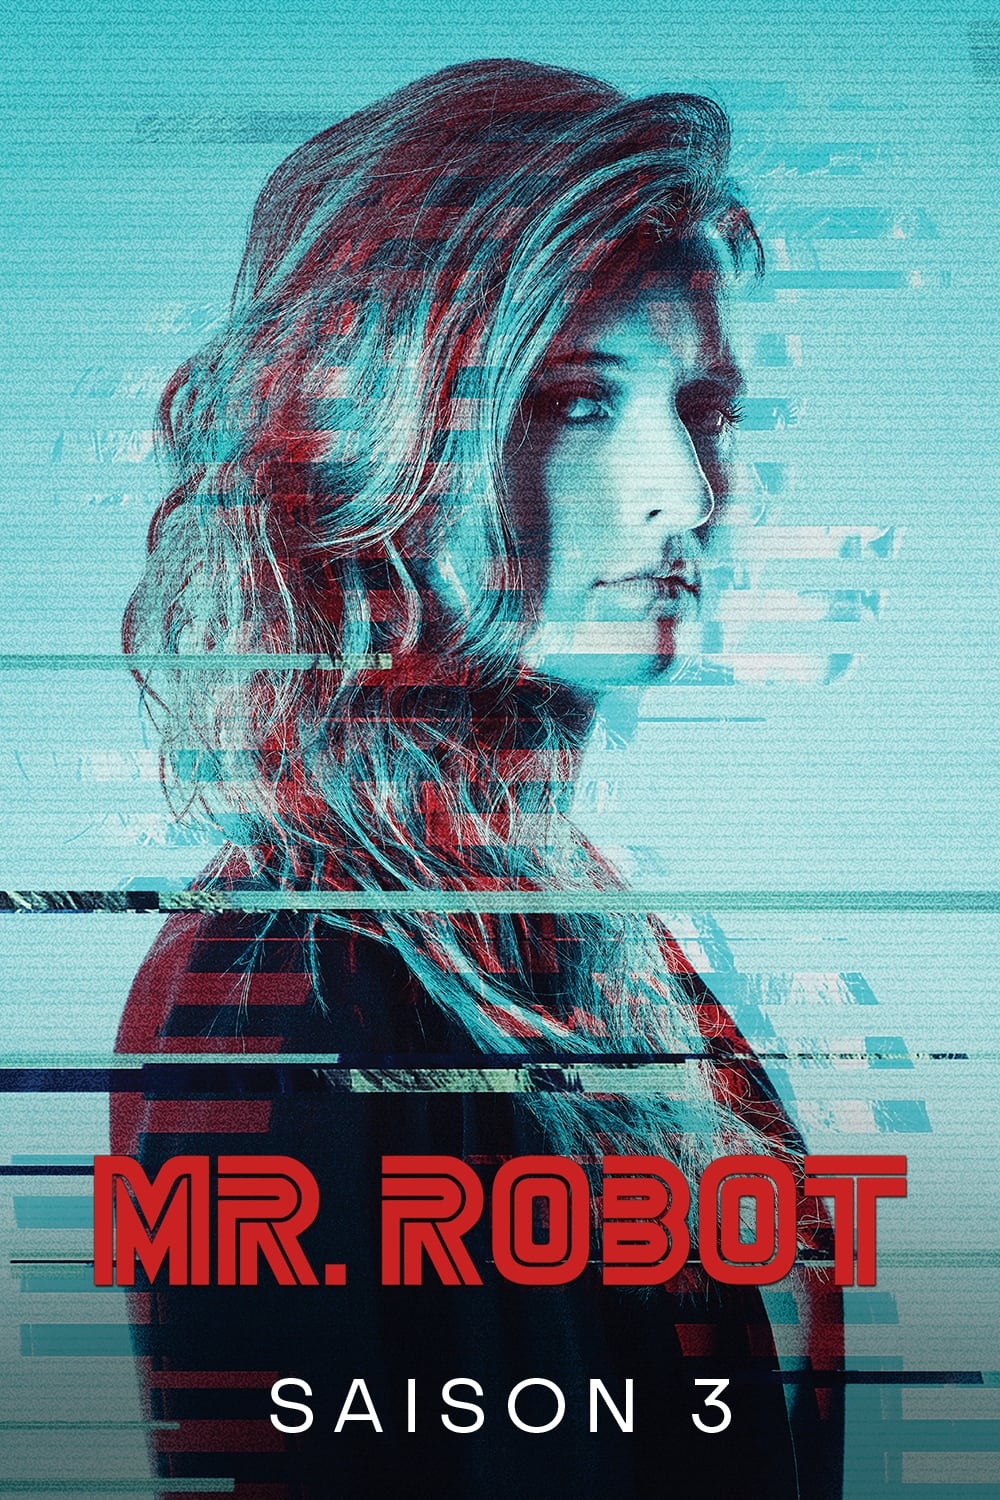 Mr. Robot eps3.7_dont-delete-me.ko (TV Episode 2017) - Rami Malek as Elliot  Alderson - IMDb